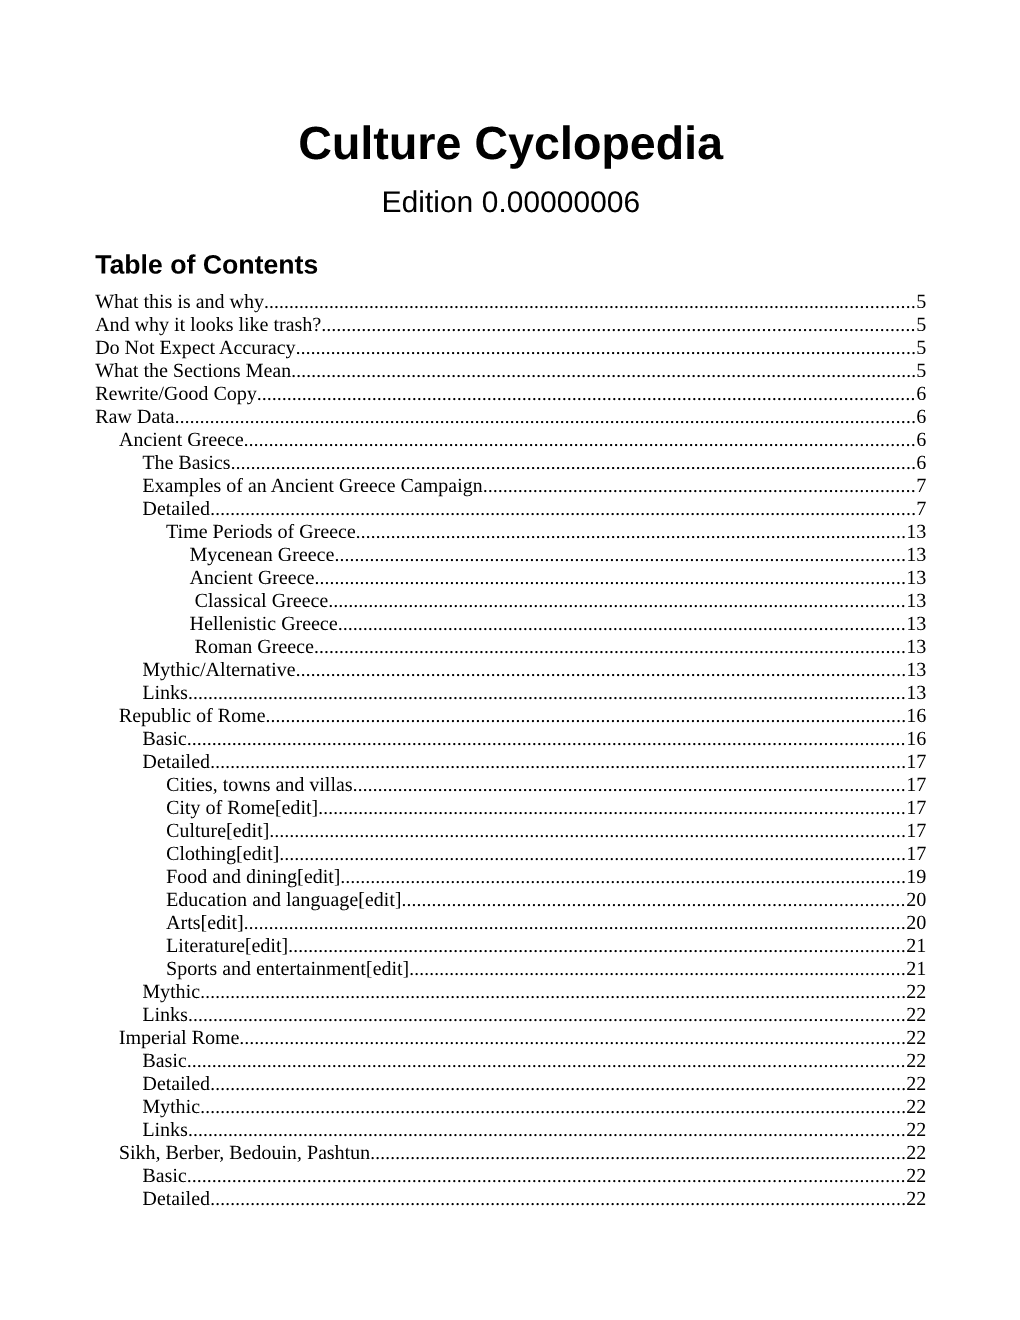 Culture Cyclopedia Edition 0.00000006